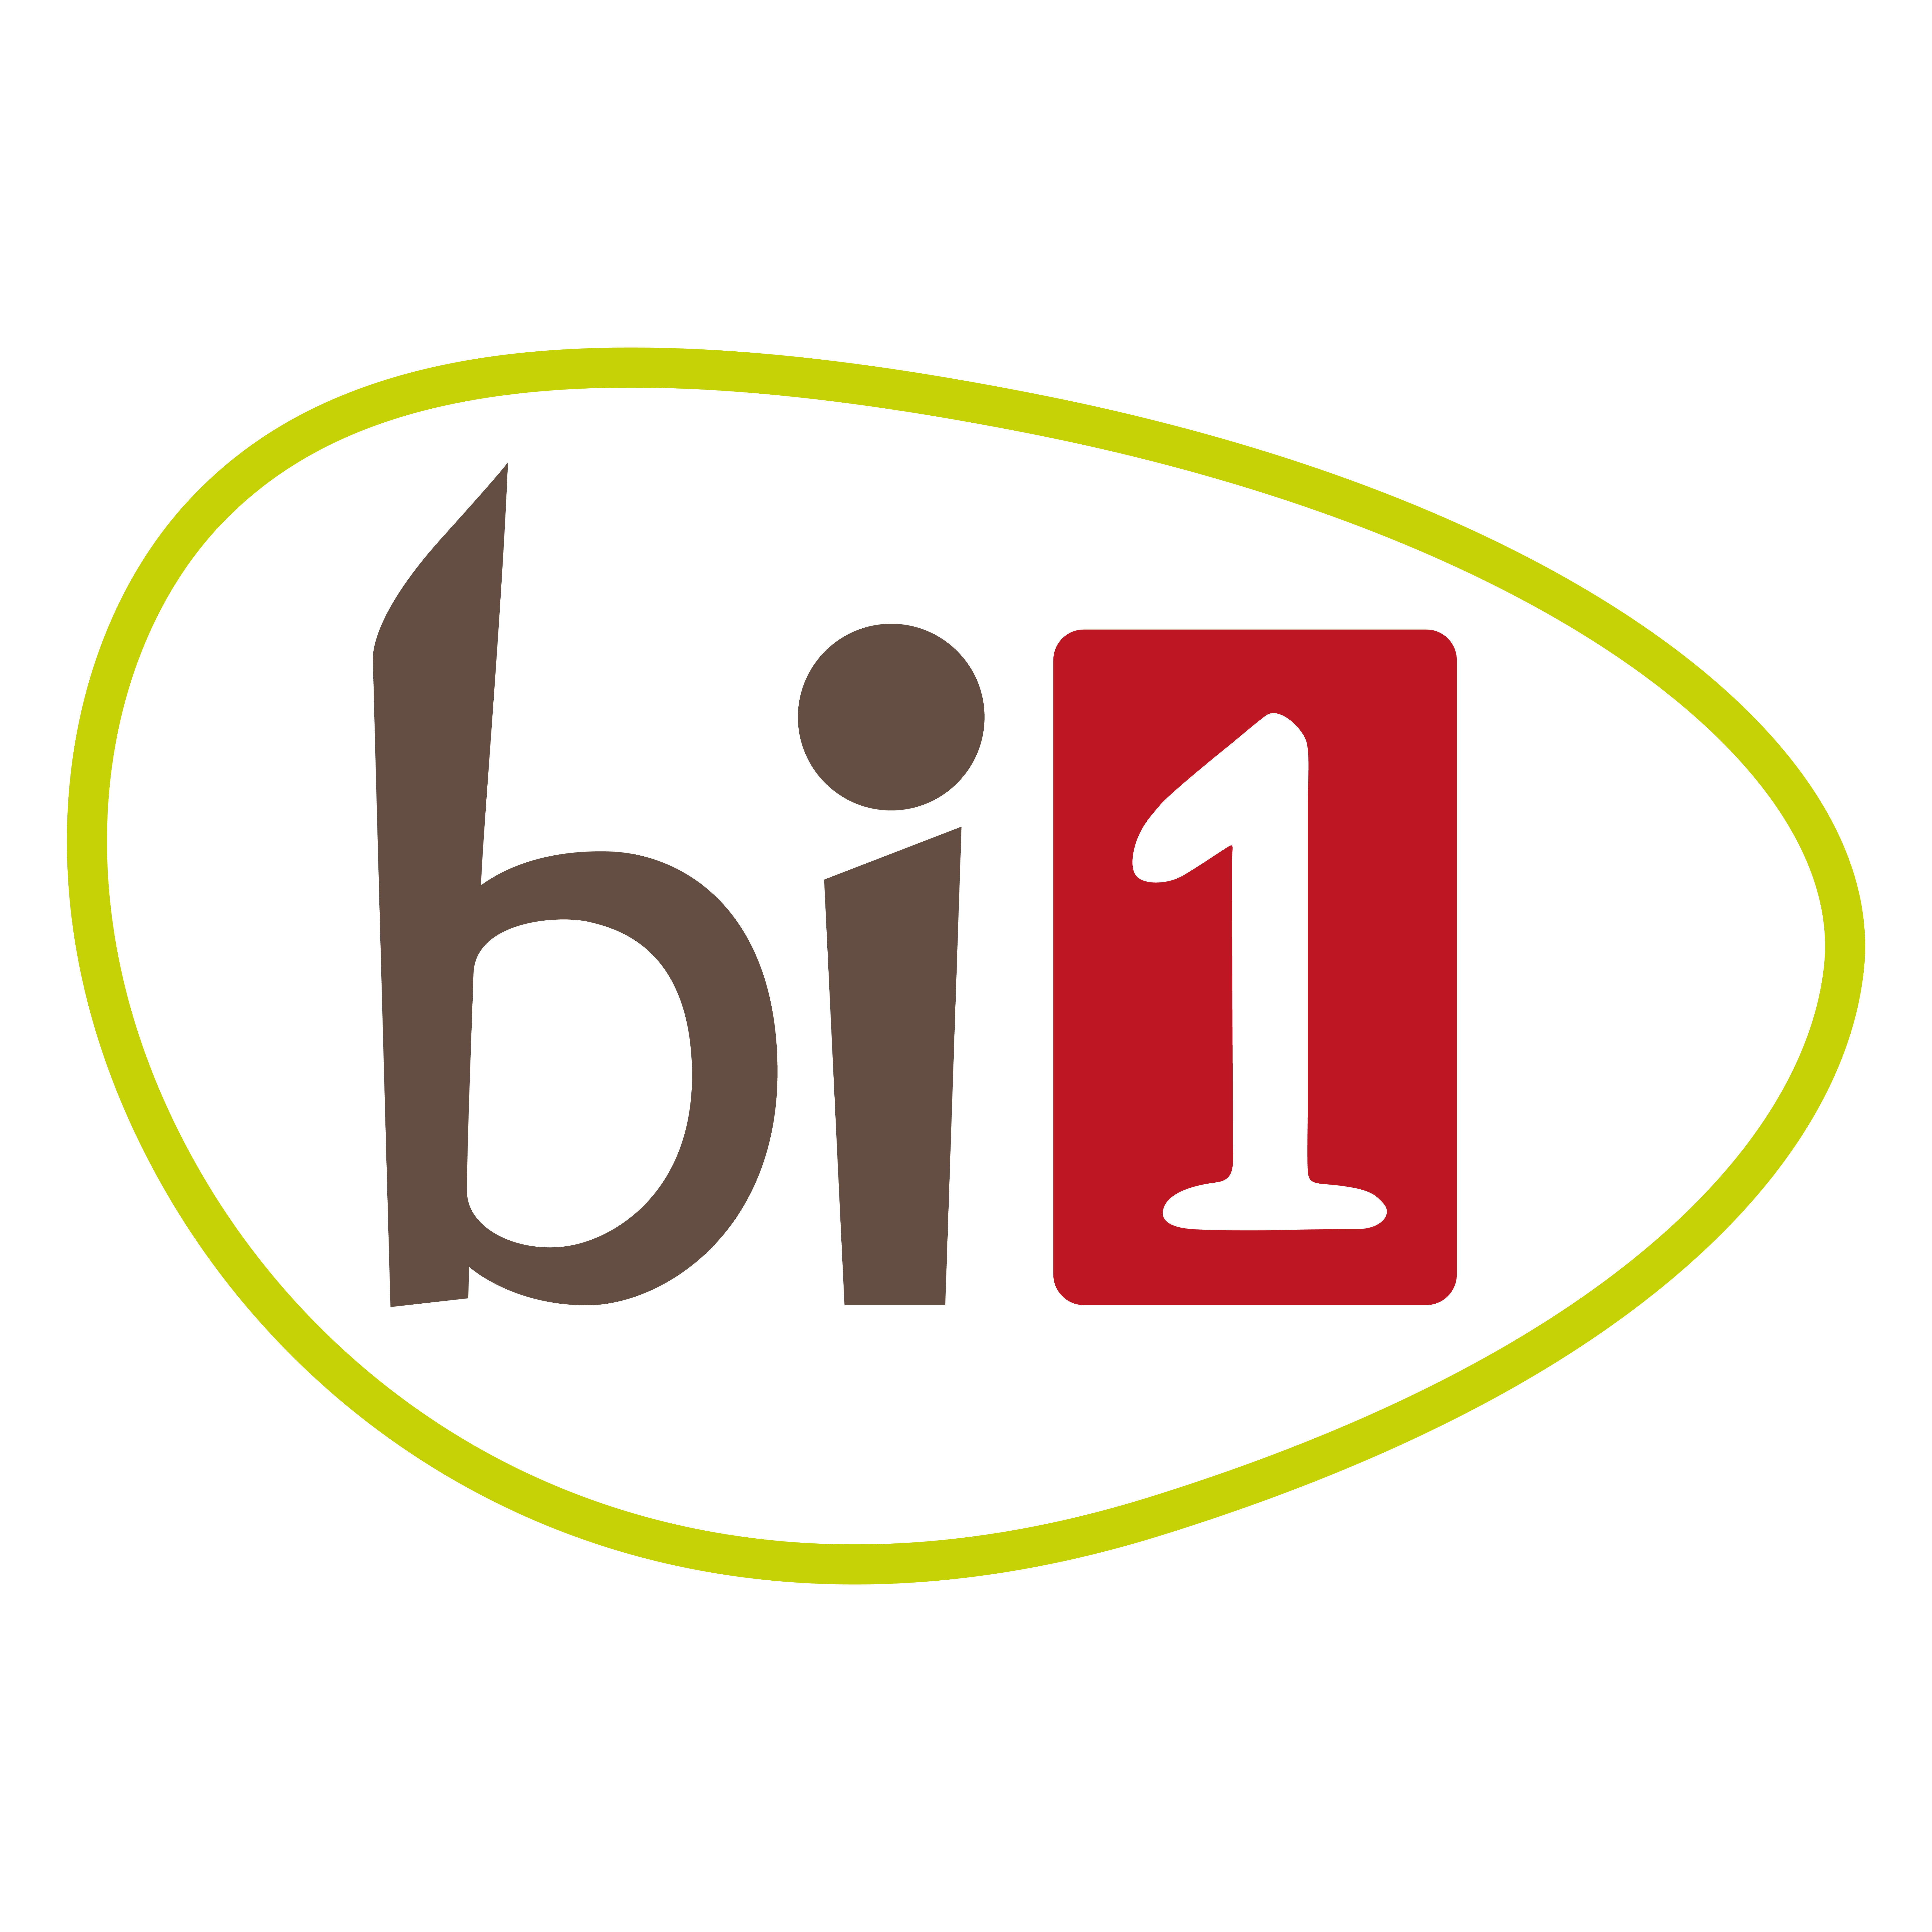 Bi file. Bi1 логотип. Логотип bi.Market. Bi1 магазины. Супермаркет логотип.